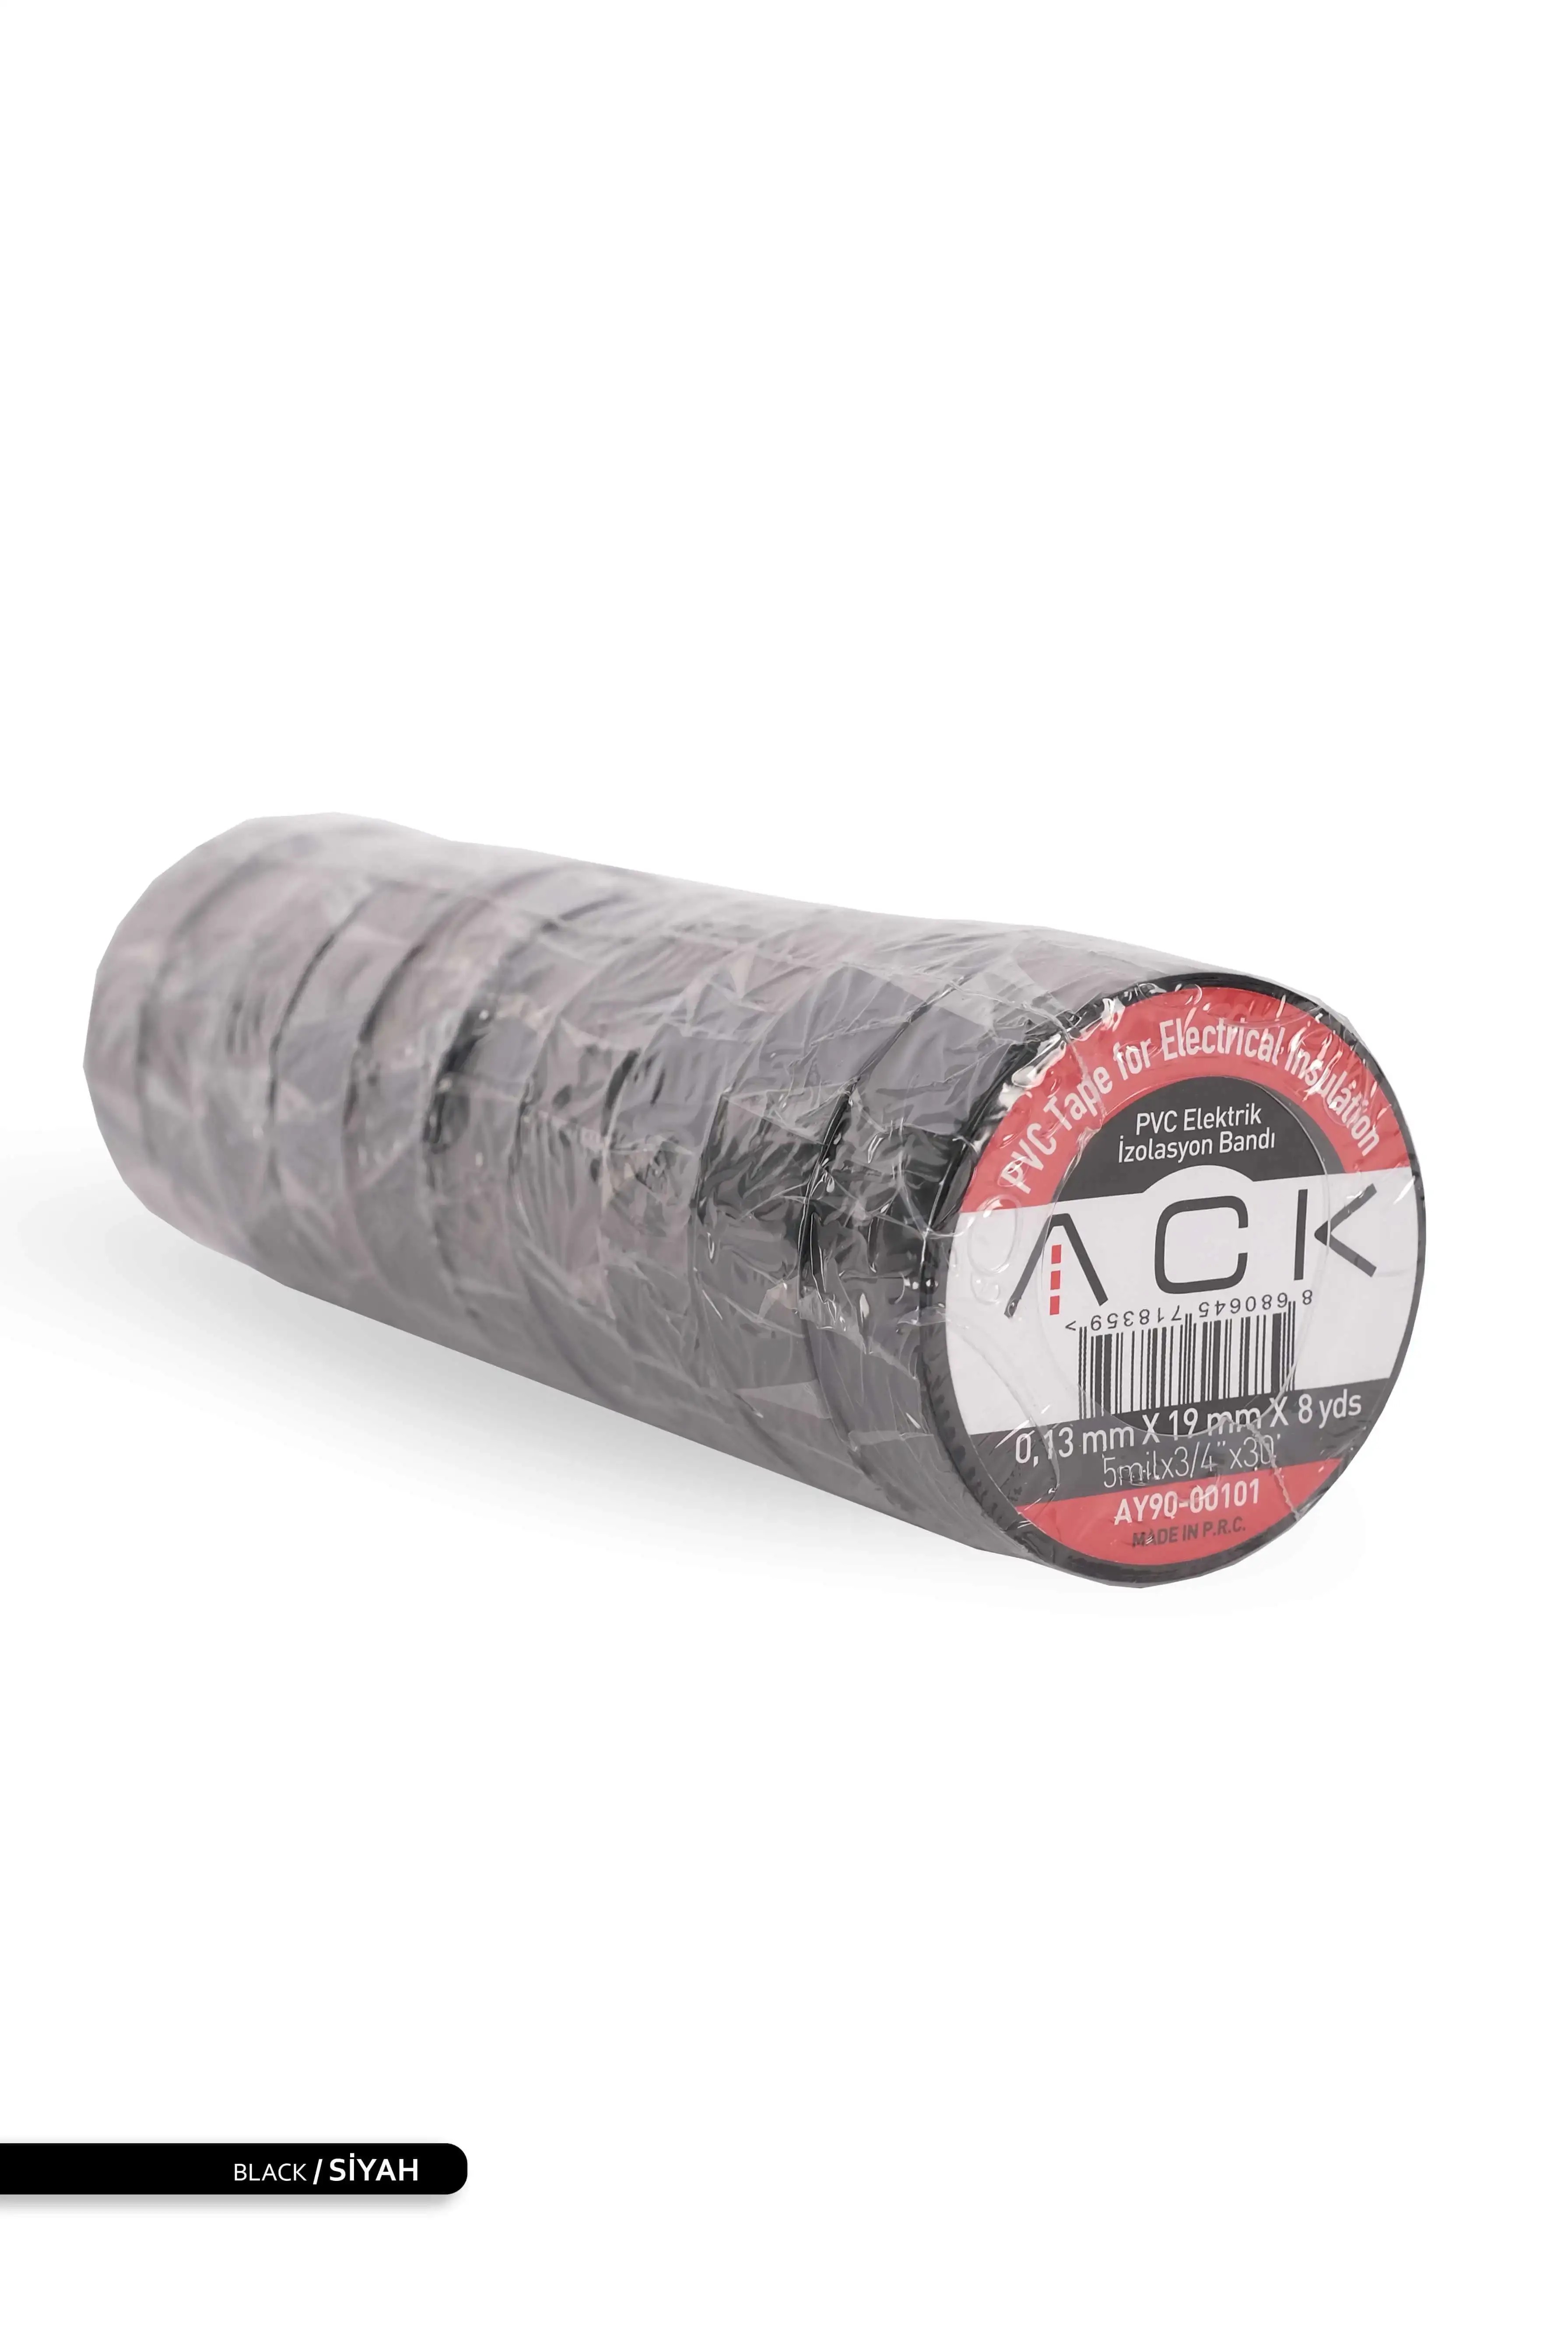 ACK PVC Elektrik İzolasyon Bandı Siyah 8m